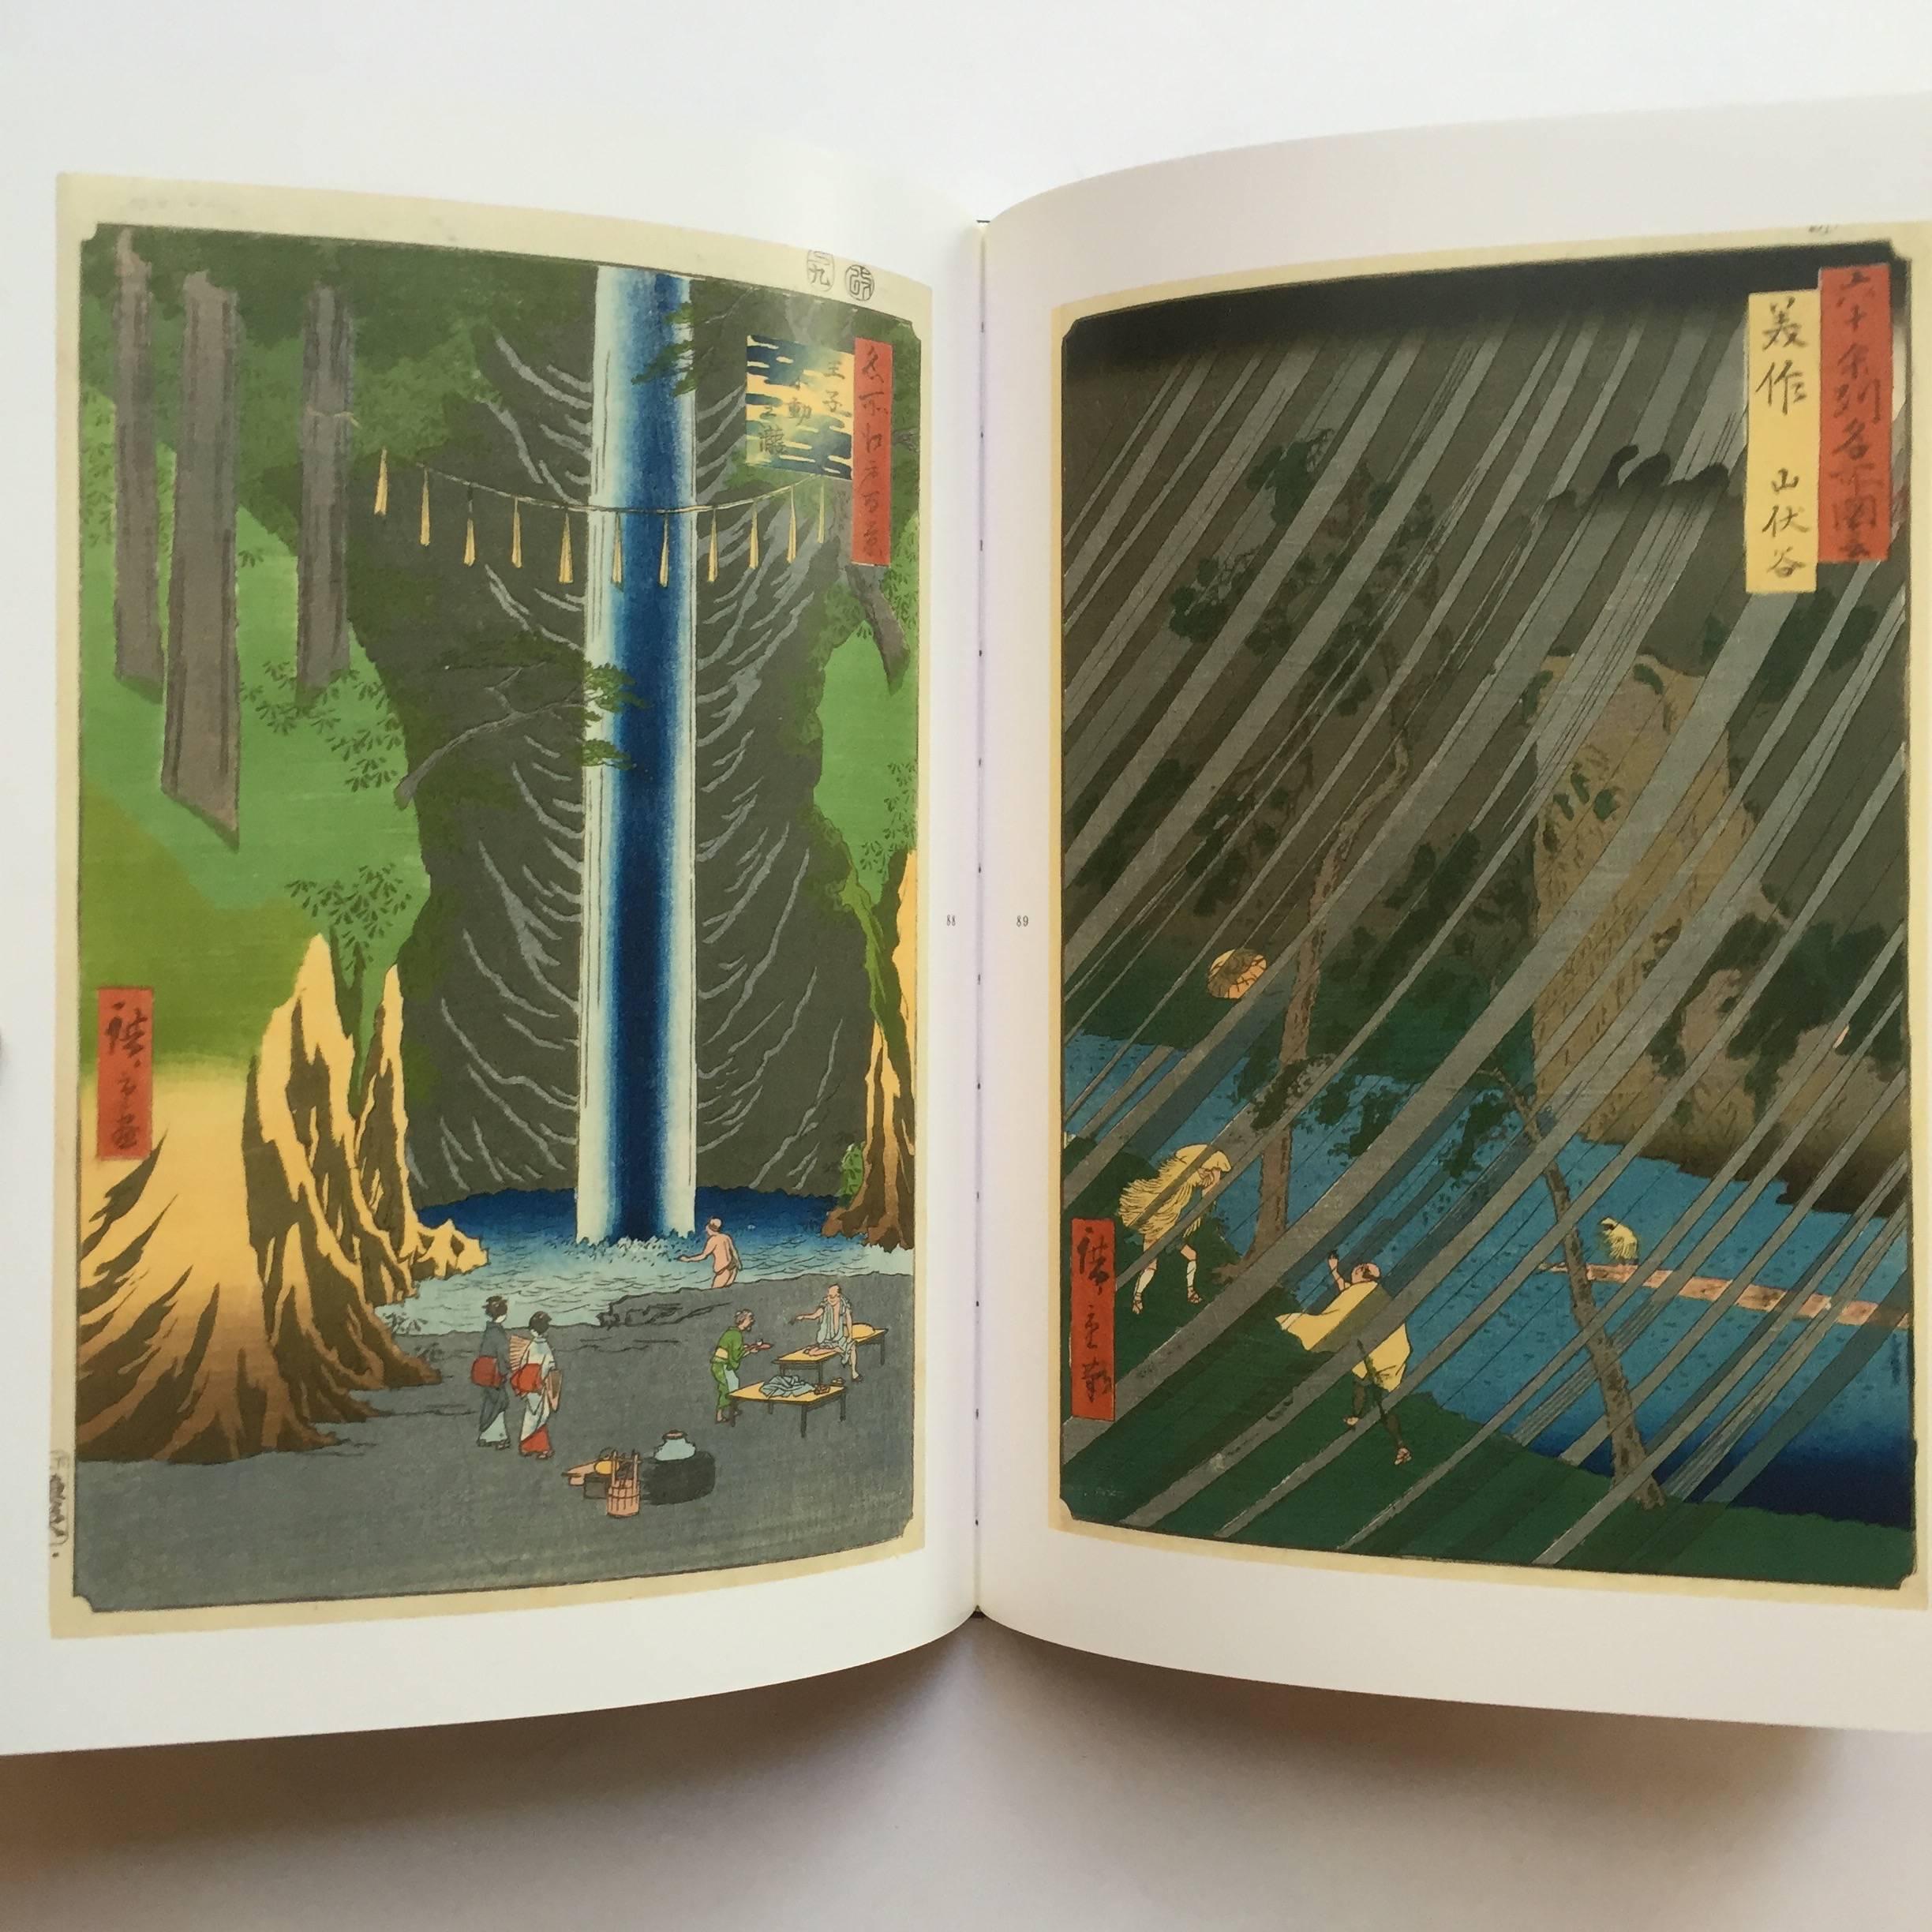 German Araki Meets Hokusai - Nobuyoshi Araki, Hokusai - 1st Edition, Kehrer, 2008